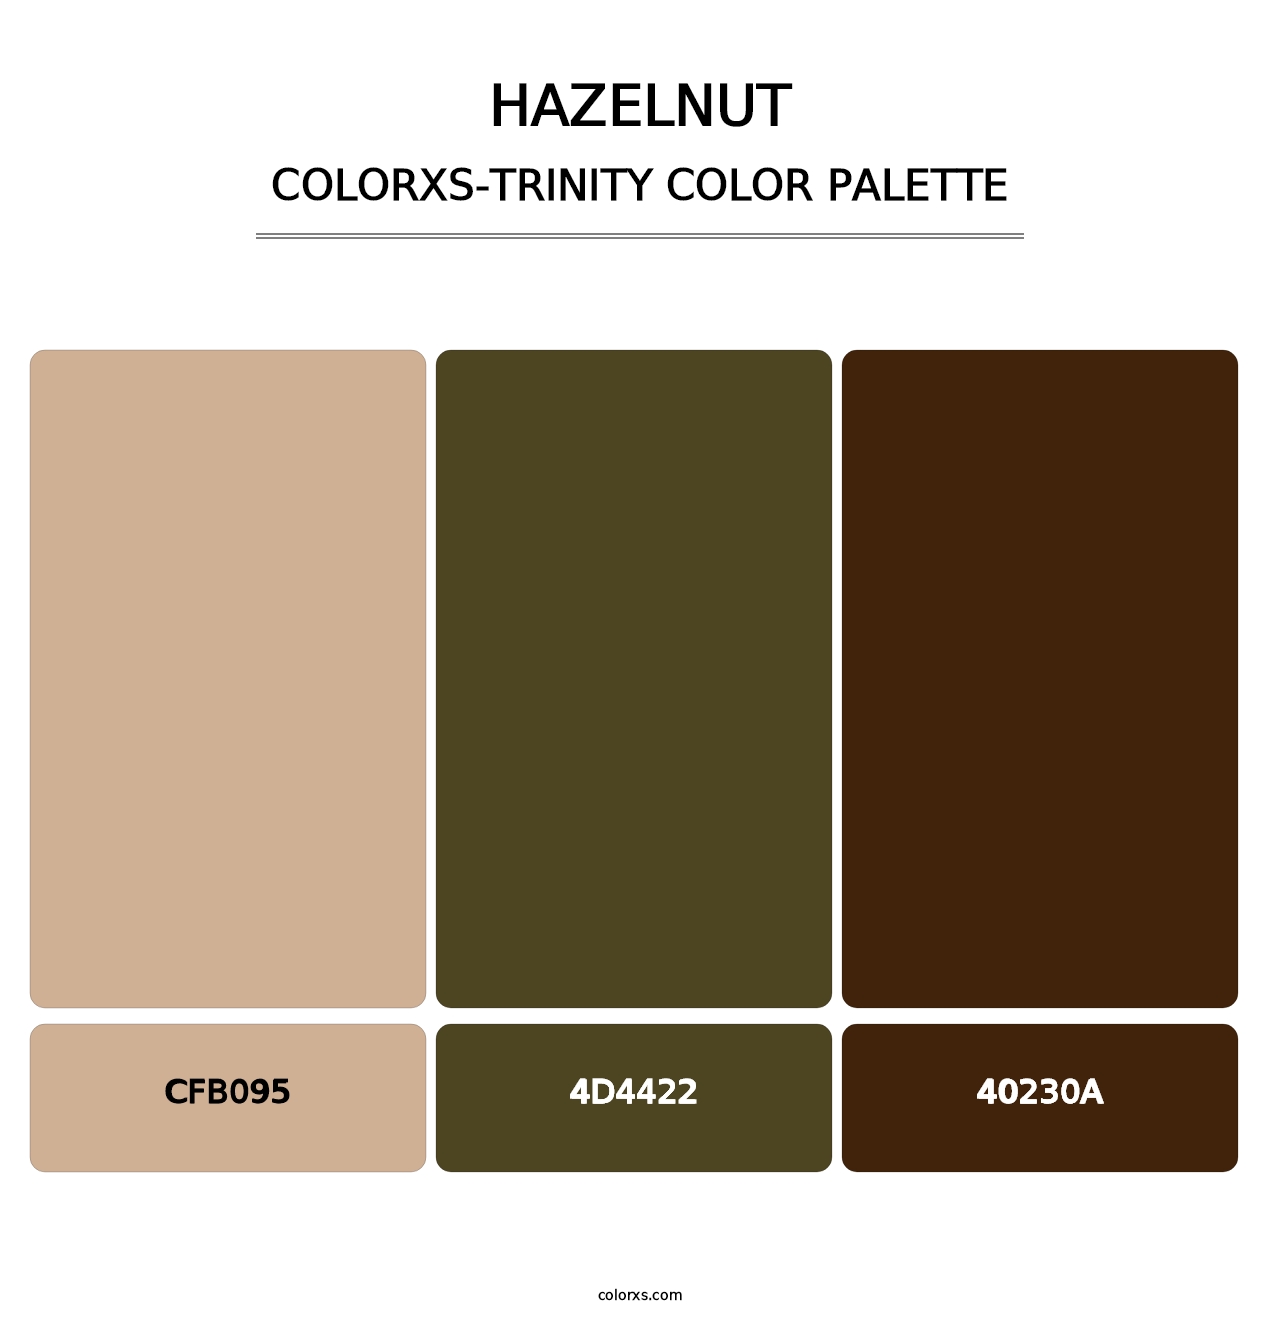 Hazelnut - Colorxs Trinity Palette